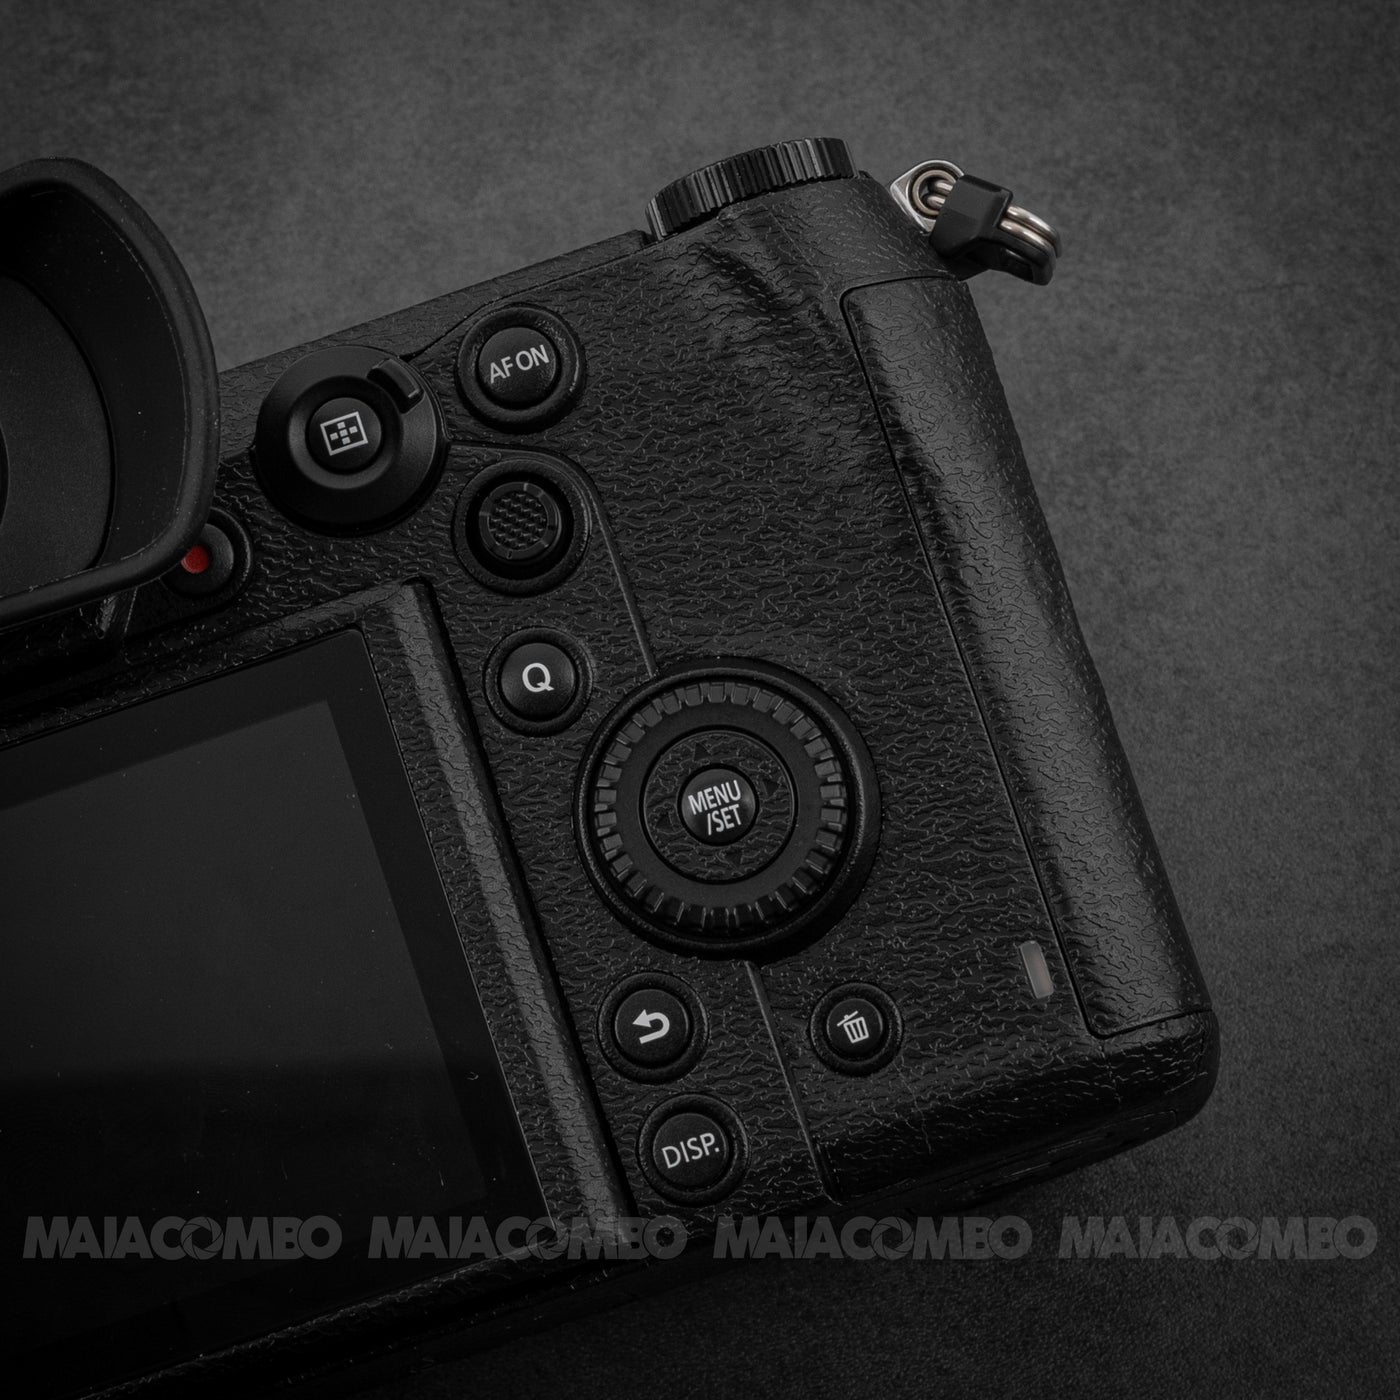 PANASONIC Lumix DC-S1R Camera Skin/ Wrap